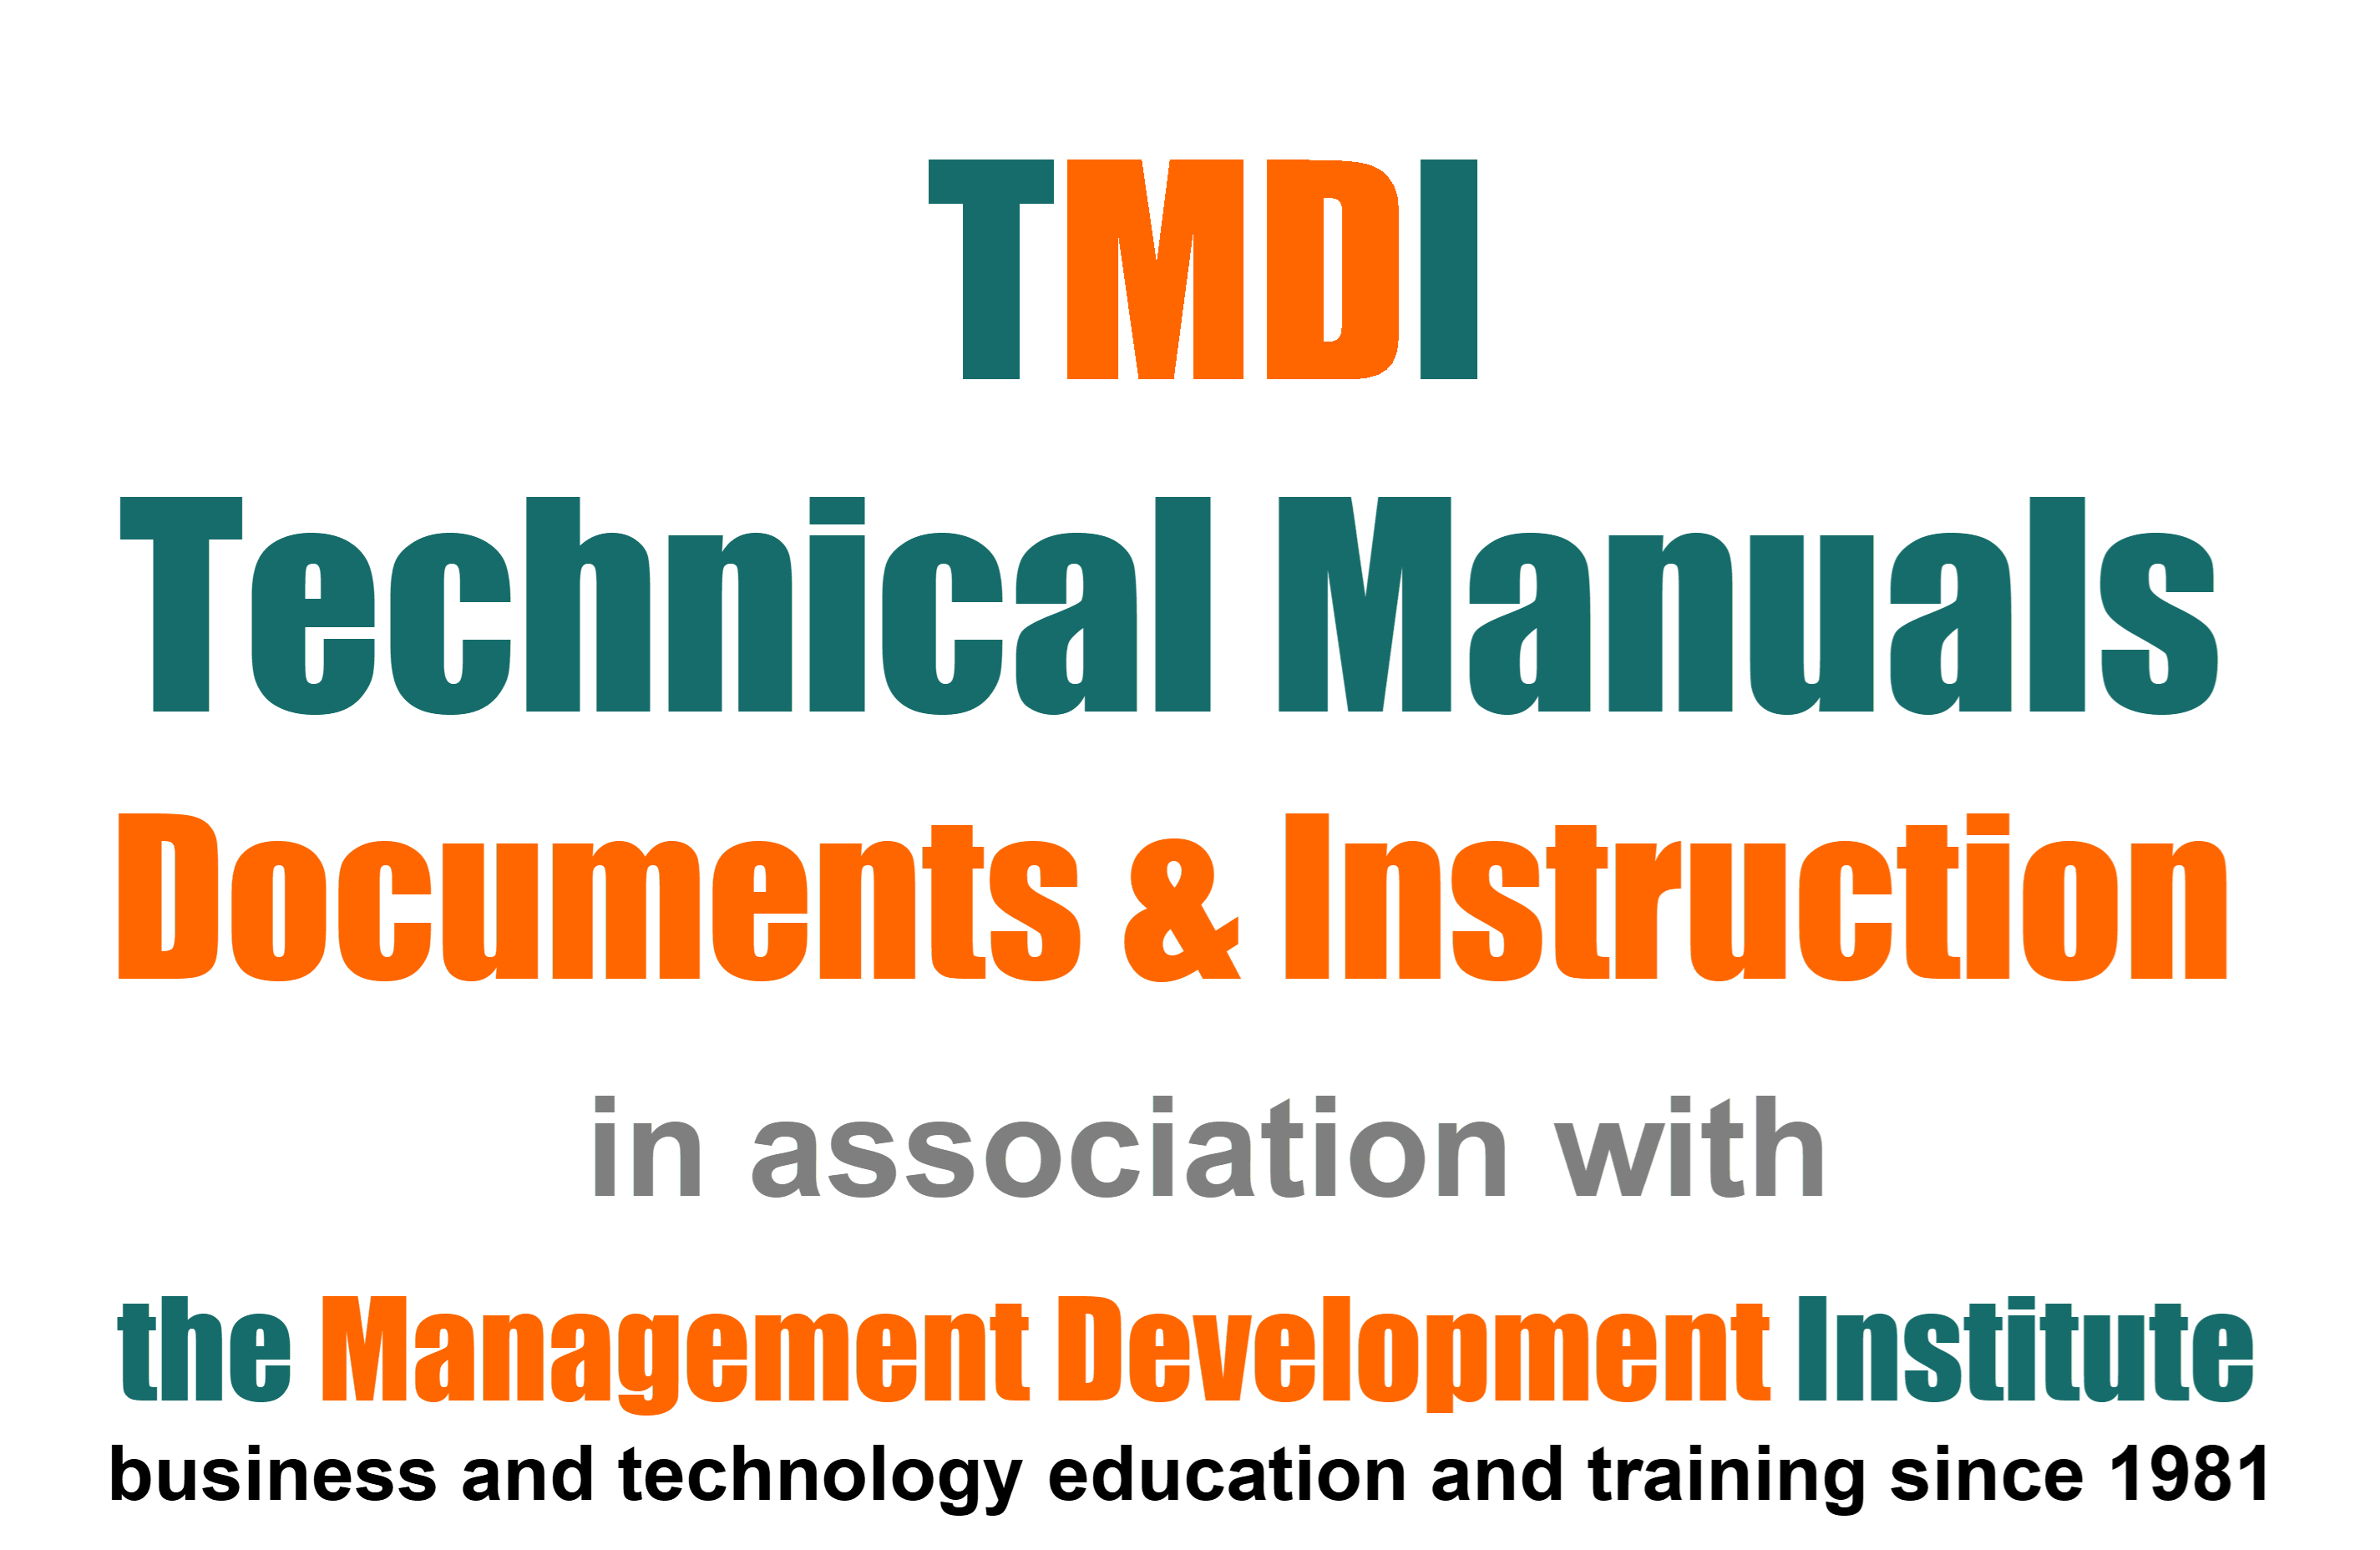 The Management Development Institute, TMDI